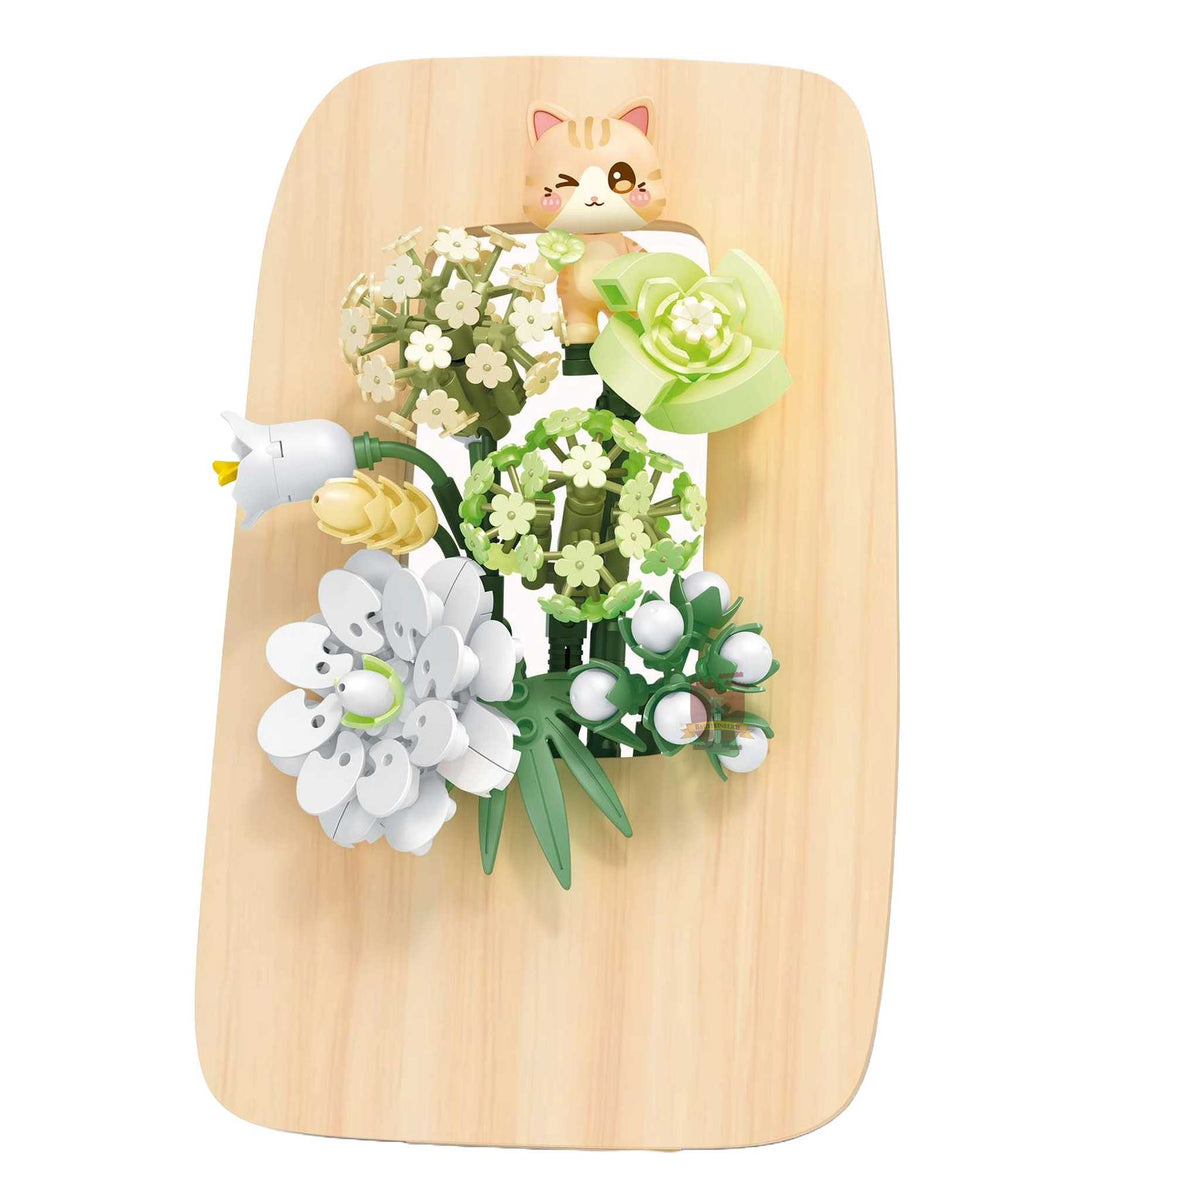 611085 - Blumengesteck grün (Sembo)